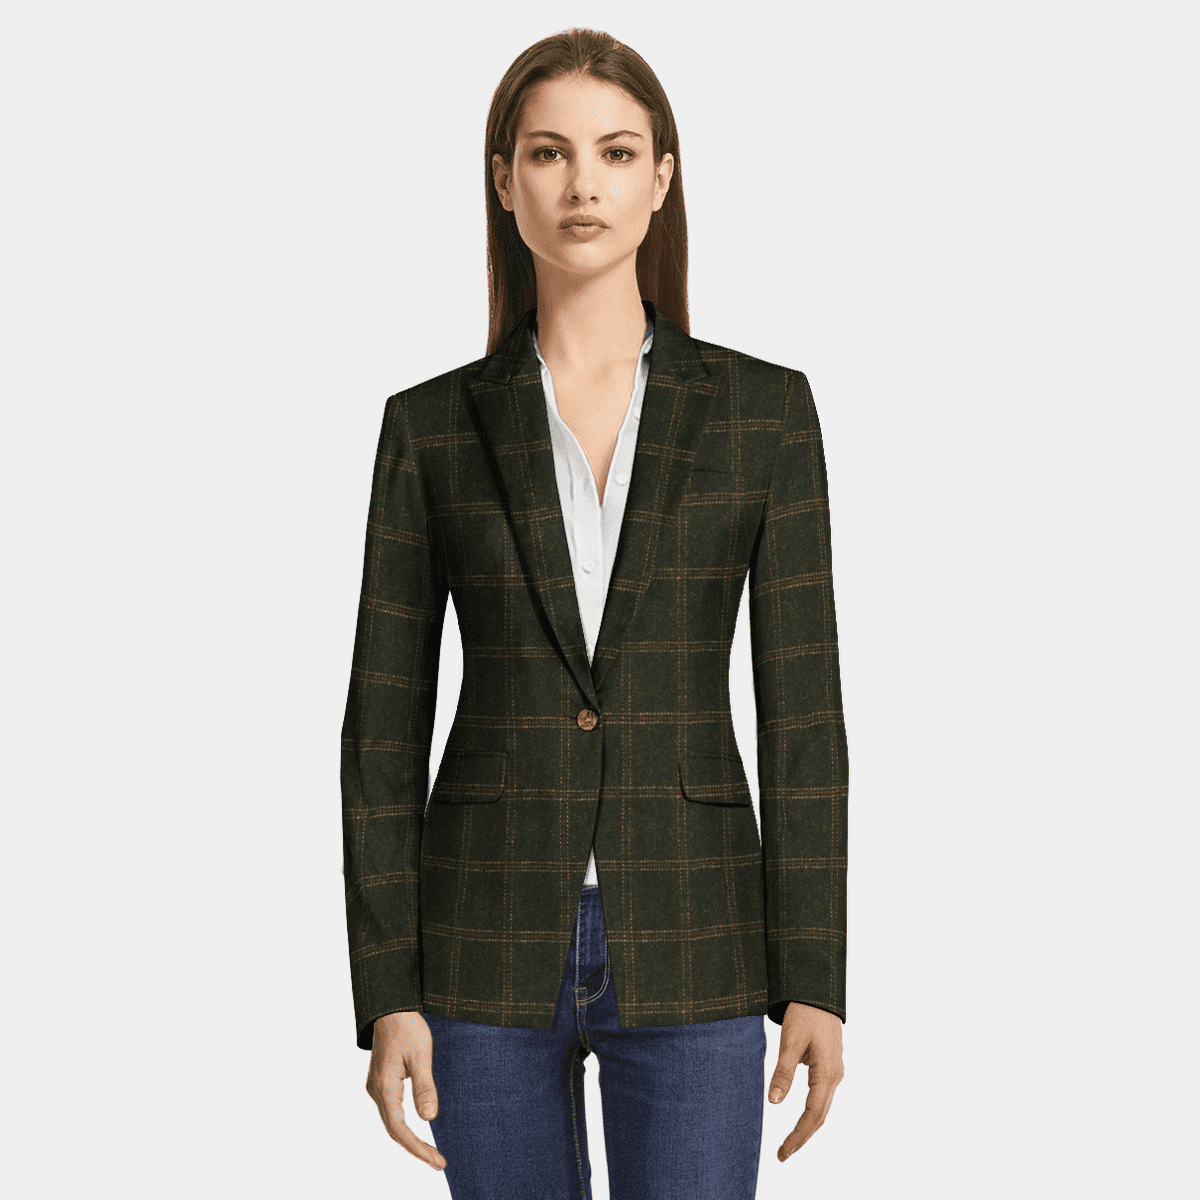  RIHOAS Women's Elegant Suit Jacket Coat and Skirt Set